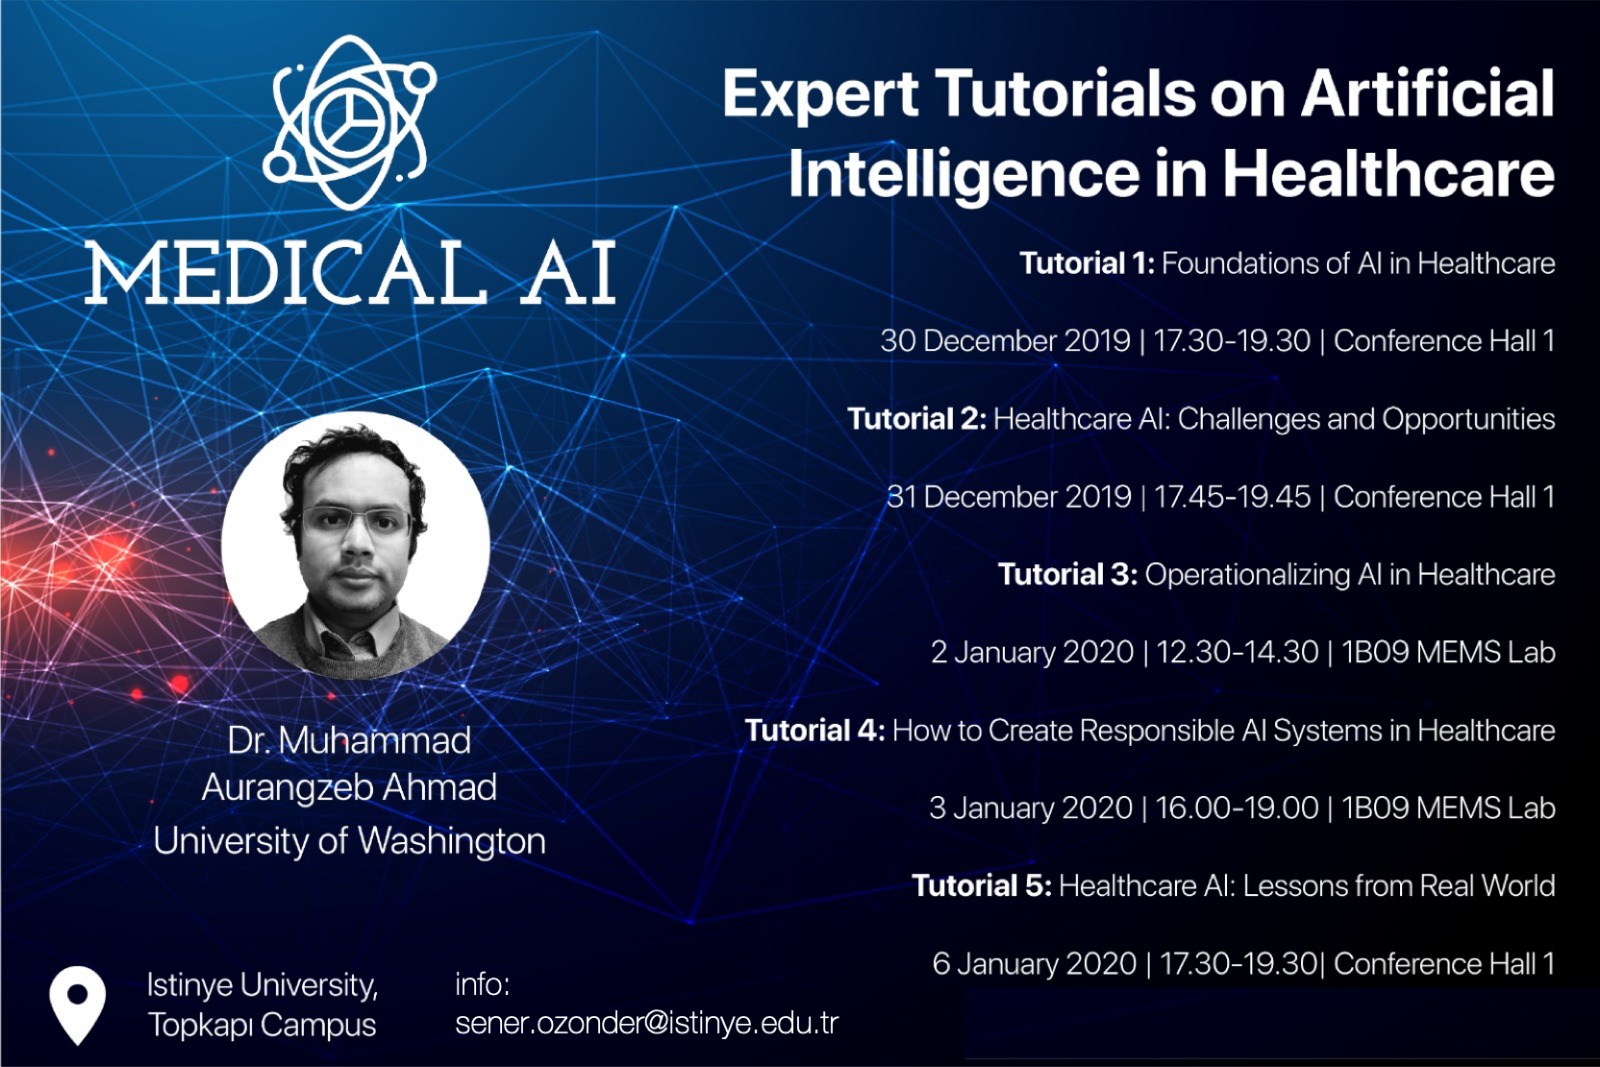 Expert Tutorials on Artificial Intelligence in Healthcare  Speaker: Dr. Muhammad Aurangzeb Ahmad